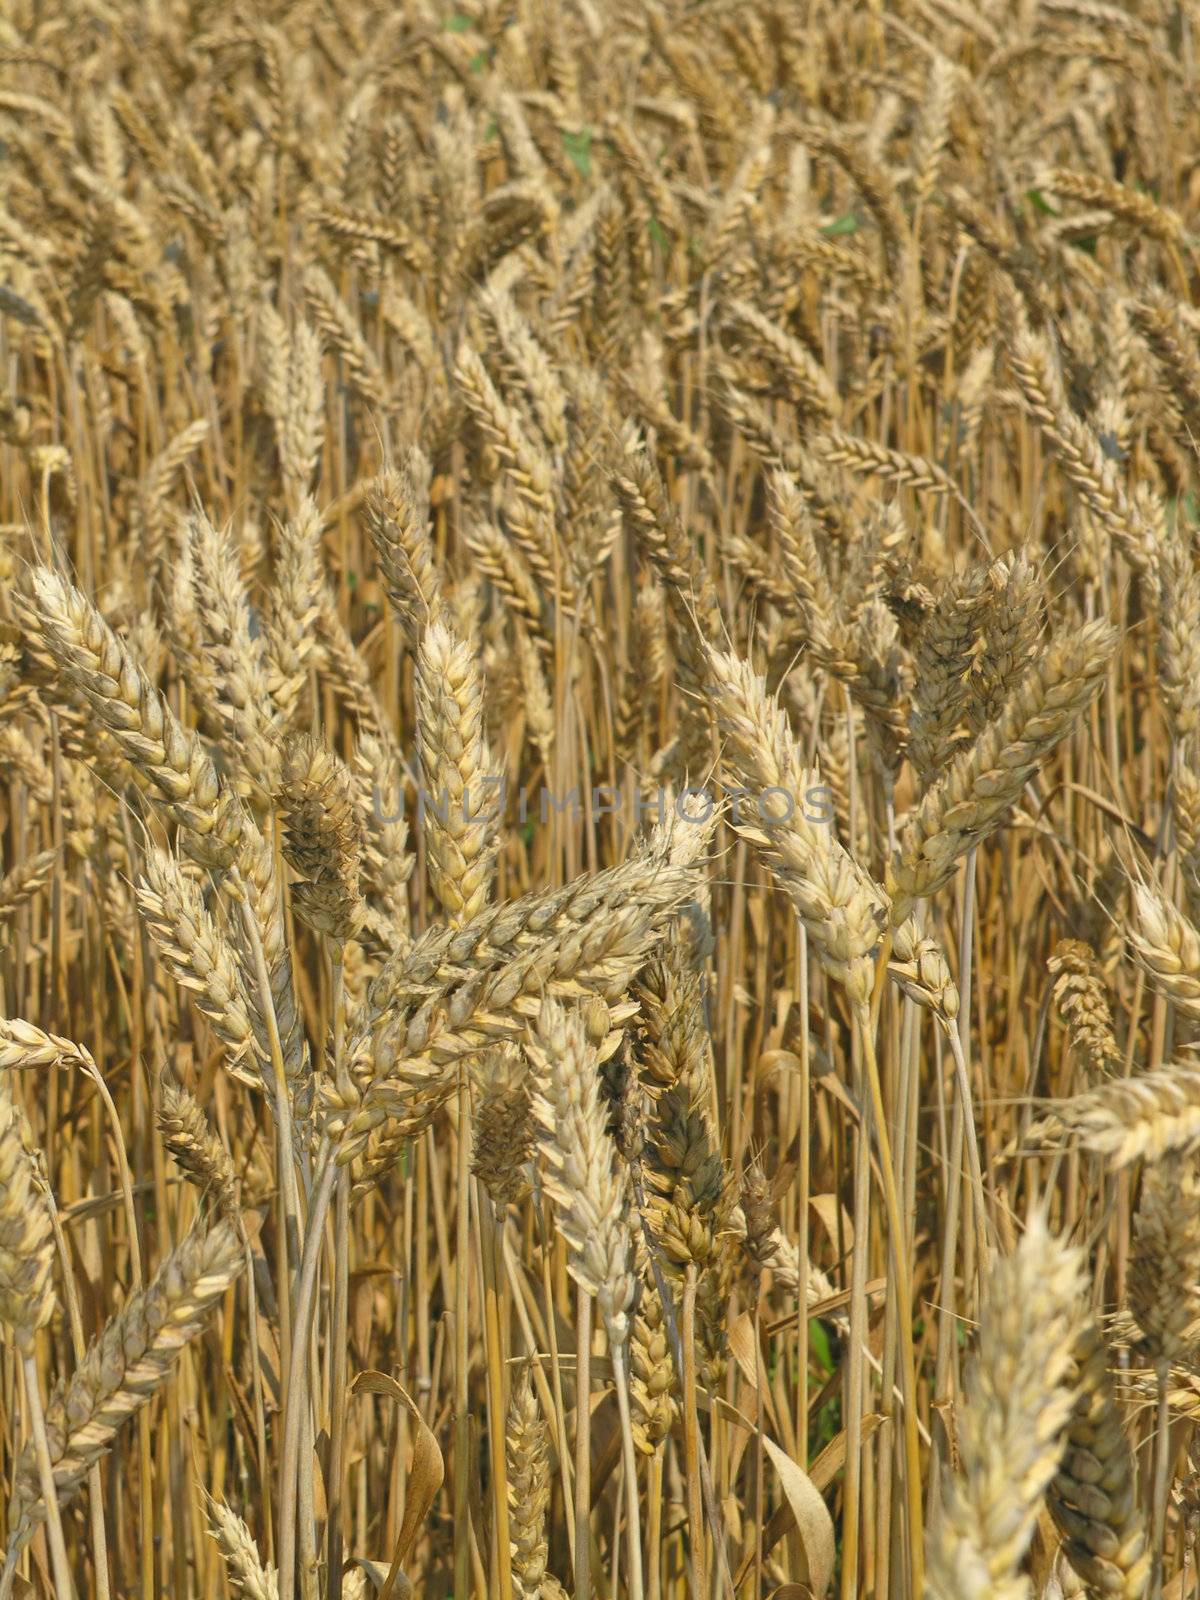 Harvest Field by adamr